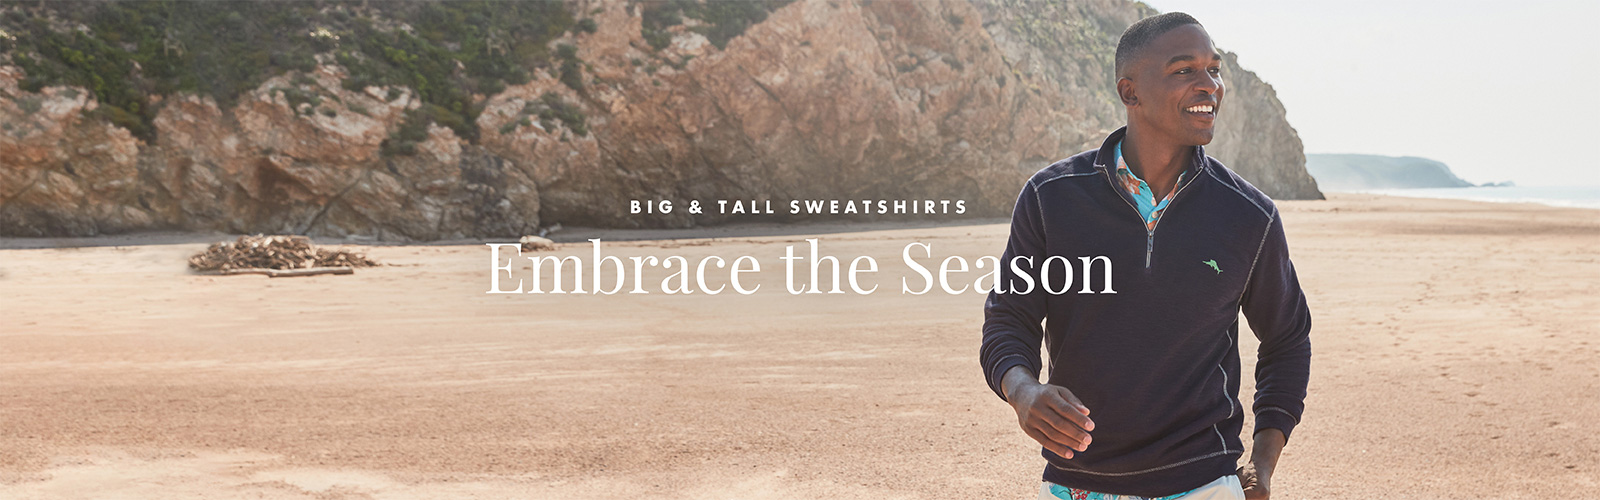 Big & Tall Sweatshirts - Embrace the Season